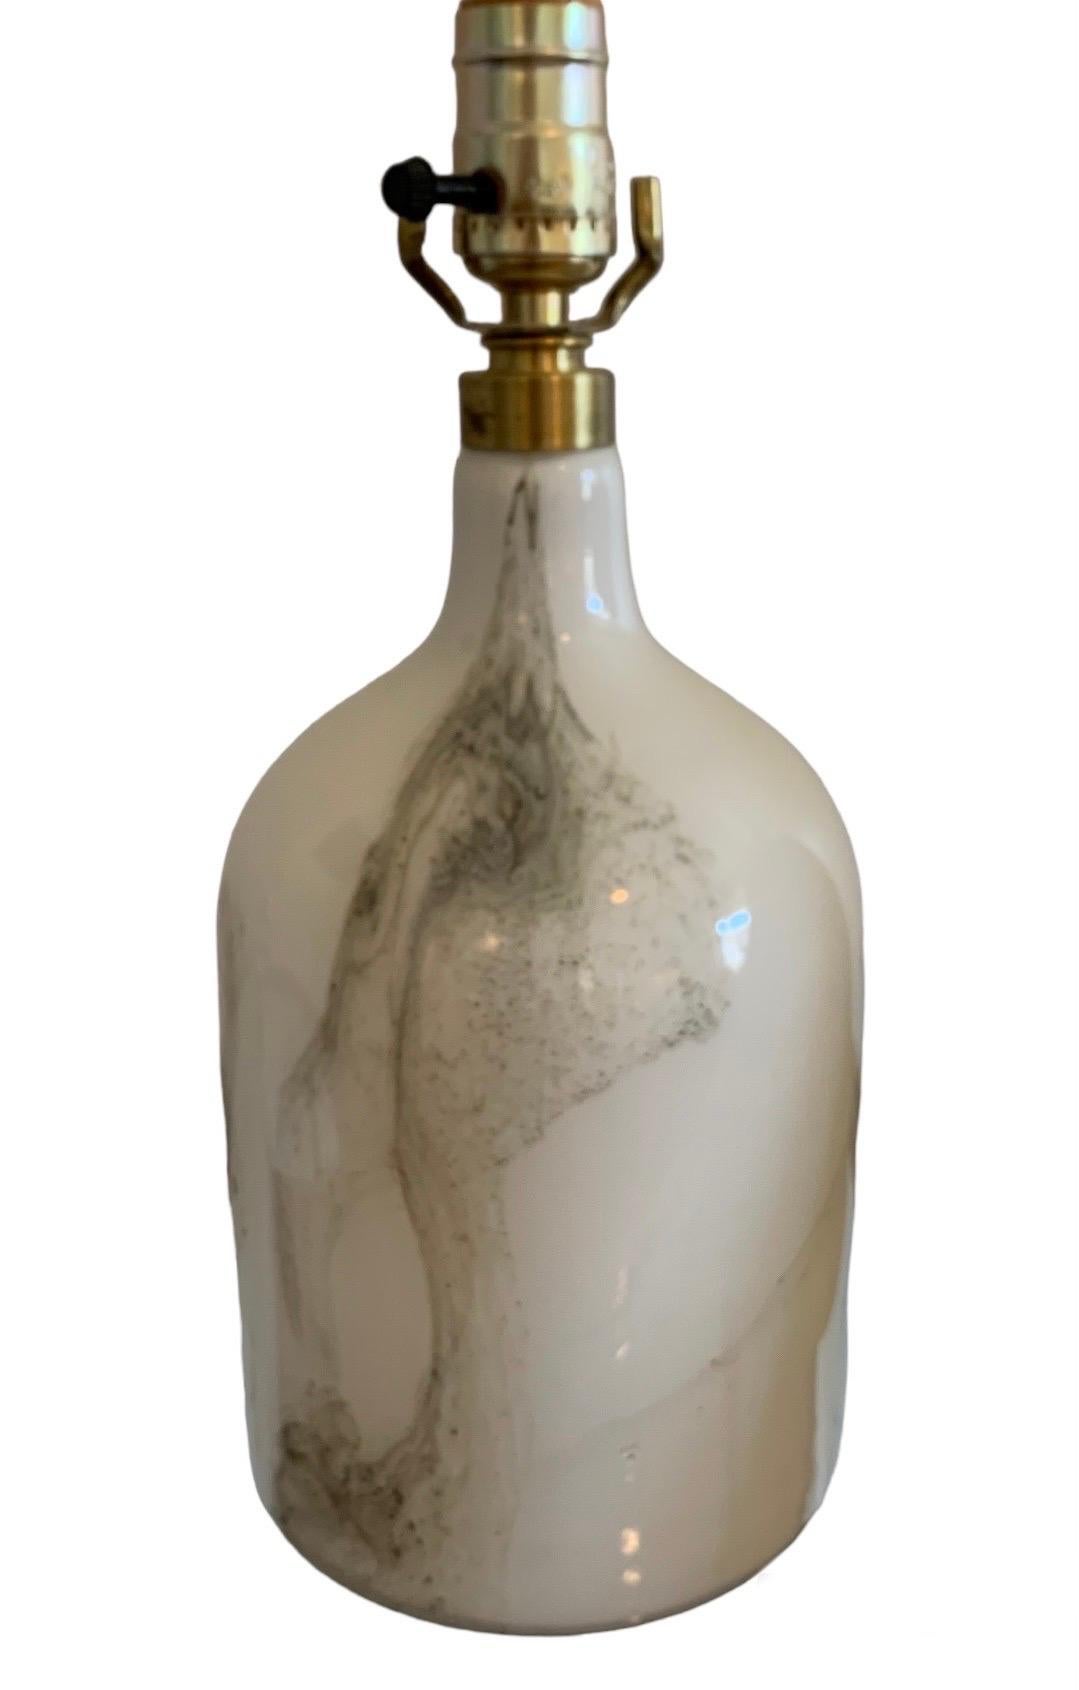 Minimalist 1980s Holmegaard ‘Symmetrisk’ Art Glass Table Lamp designed by Michael Bang For Sale